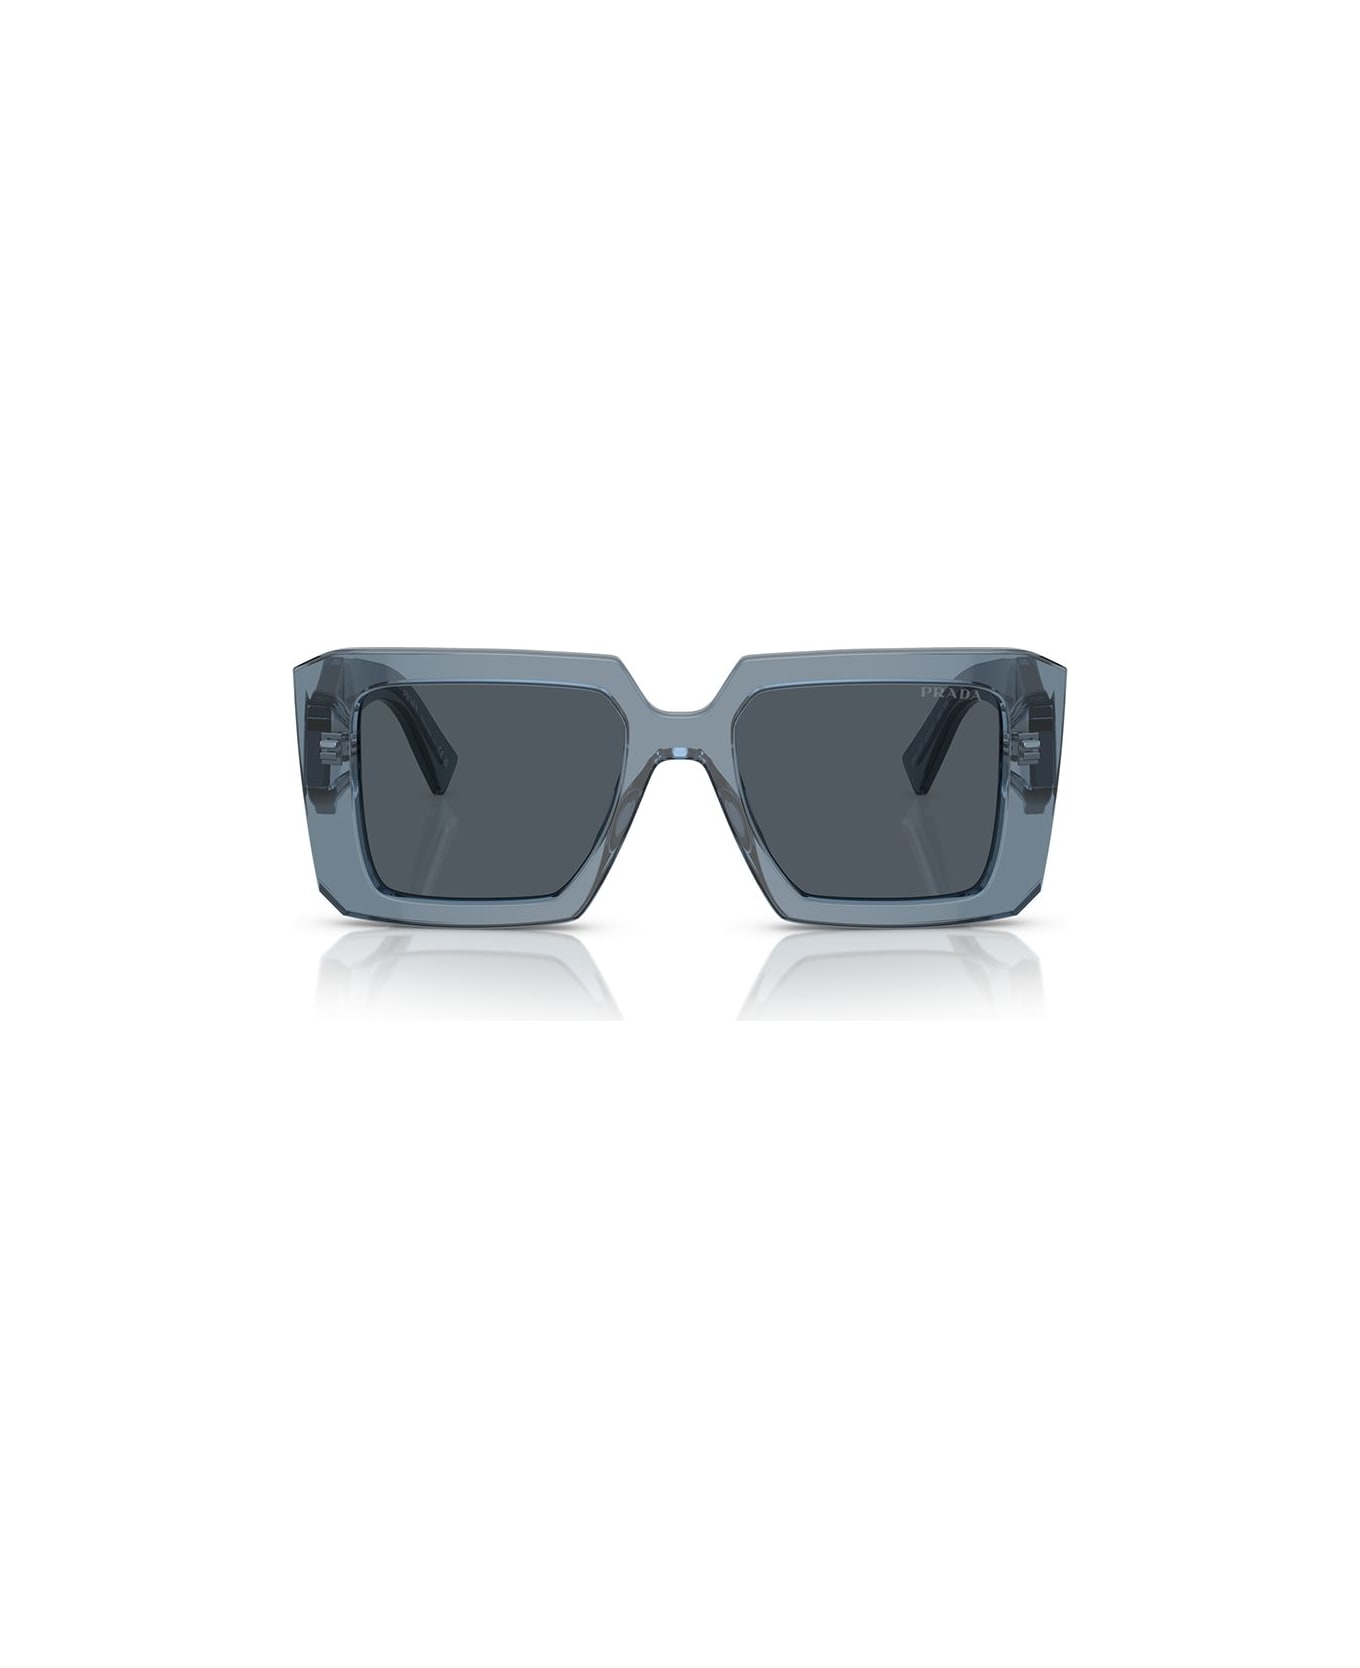 Prada Eyewear Sunglasses - 19O70B